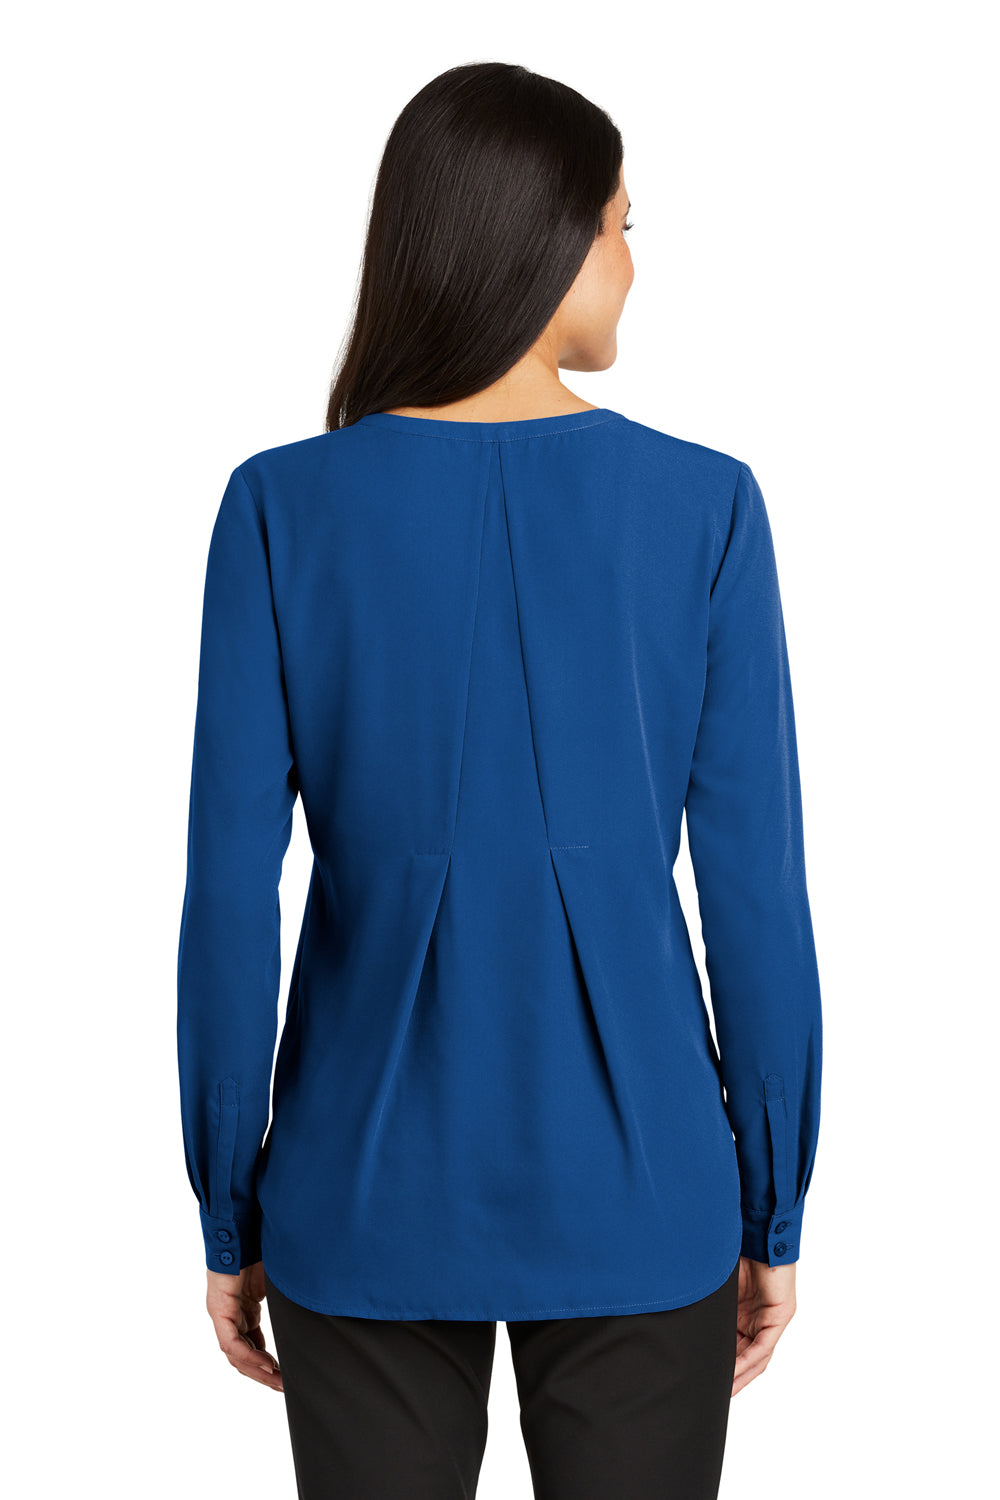 Port Authority LW700 Womens Long Sleeve Button Down Shirt Blue Back